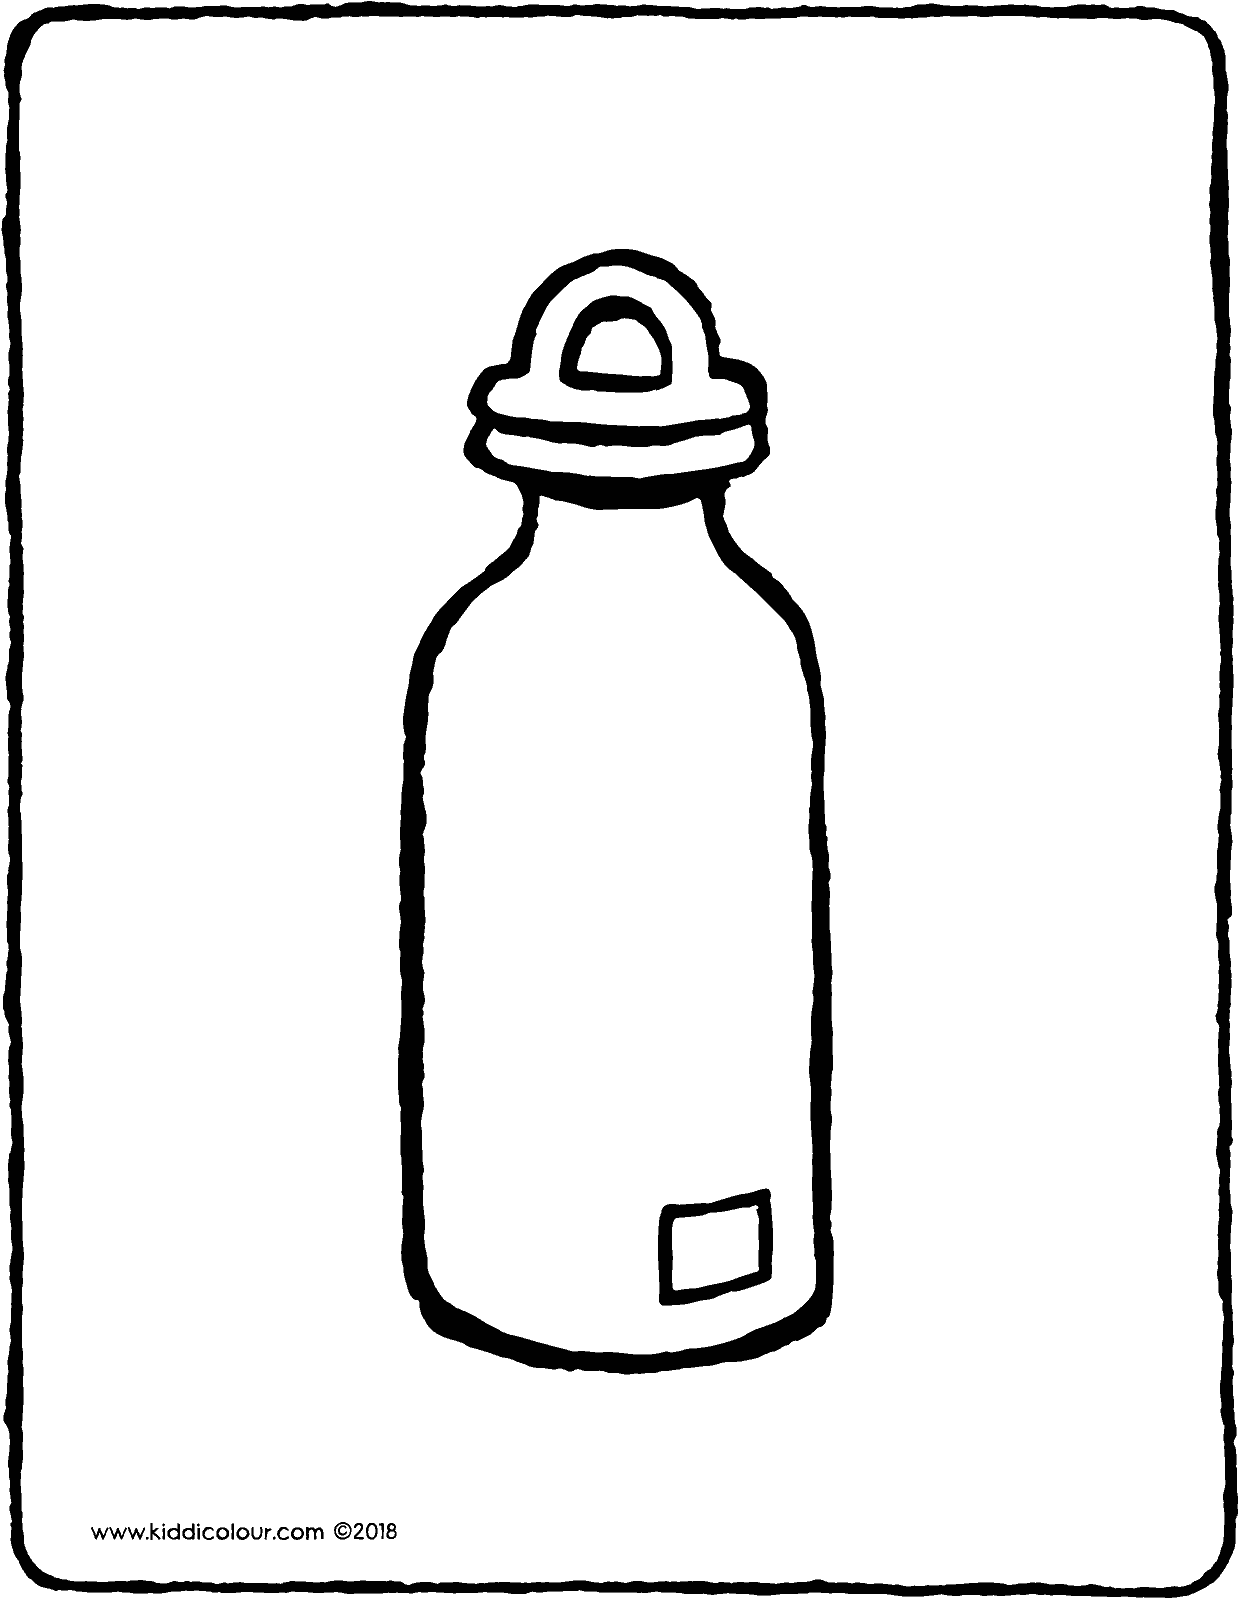 water bottle - kiddicolour